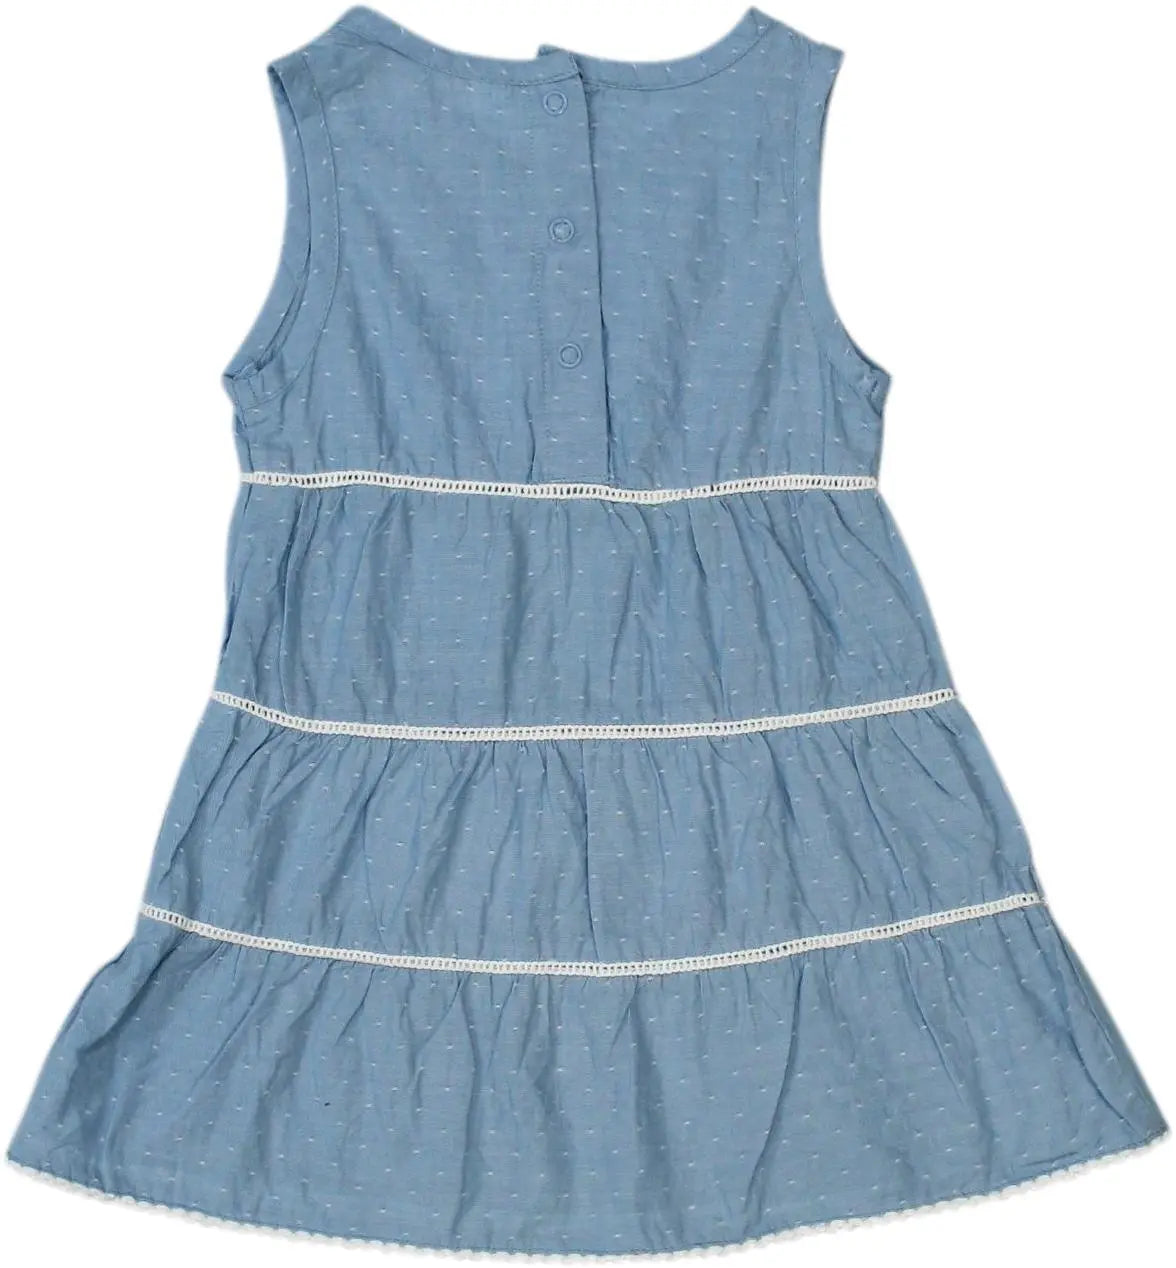 Zeeman - BLUE10700- ThriftTale.com - Vintage and second handclothing